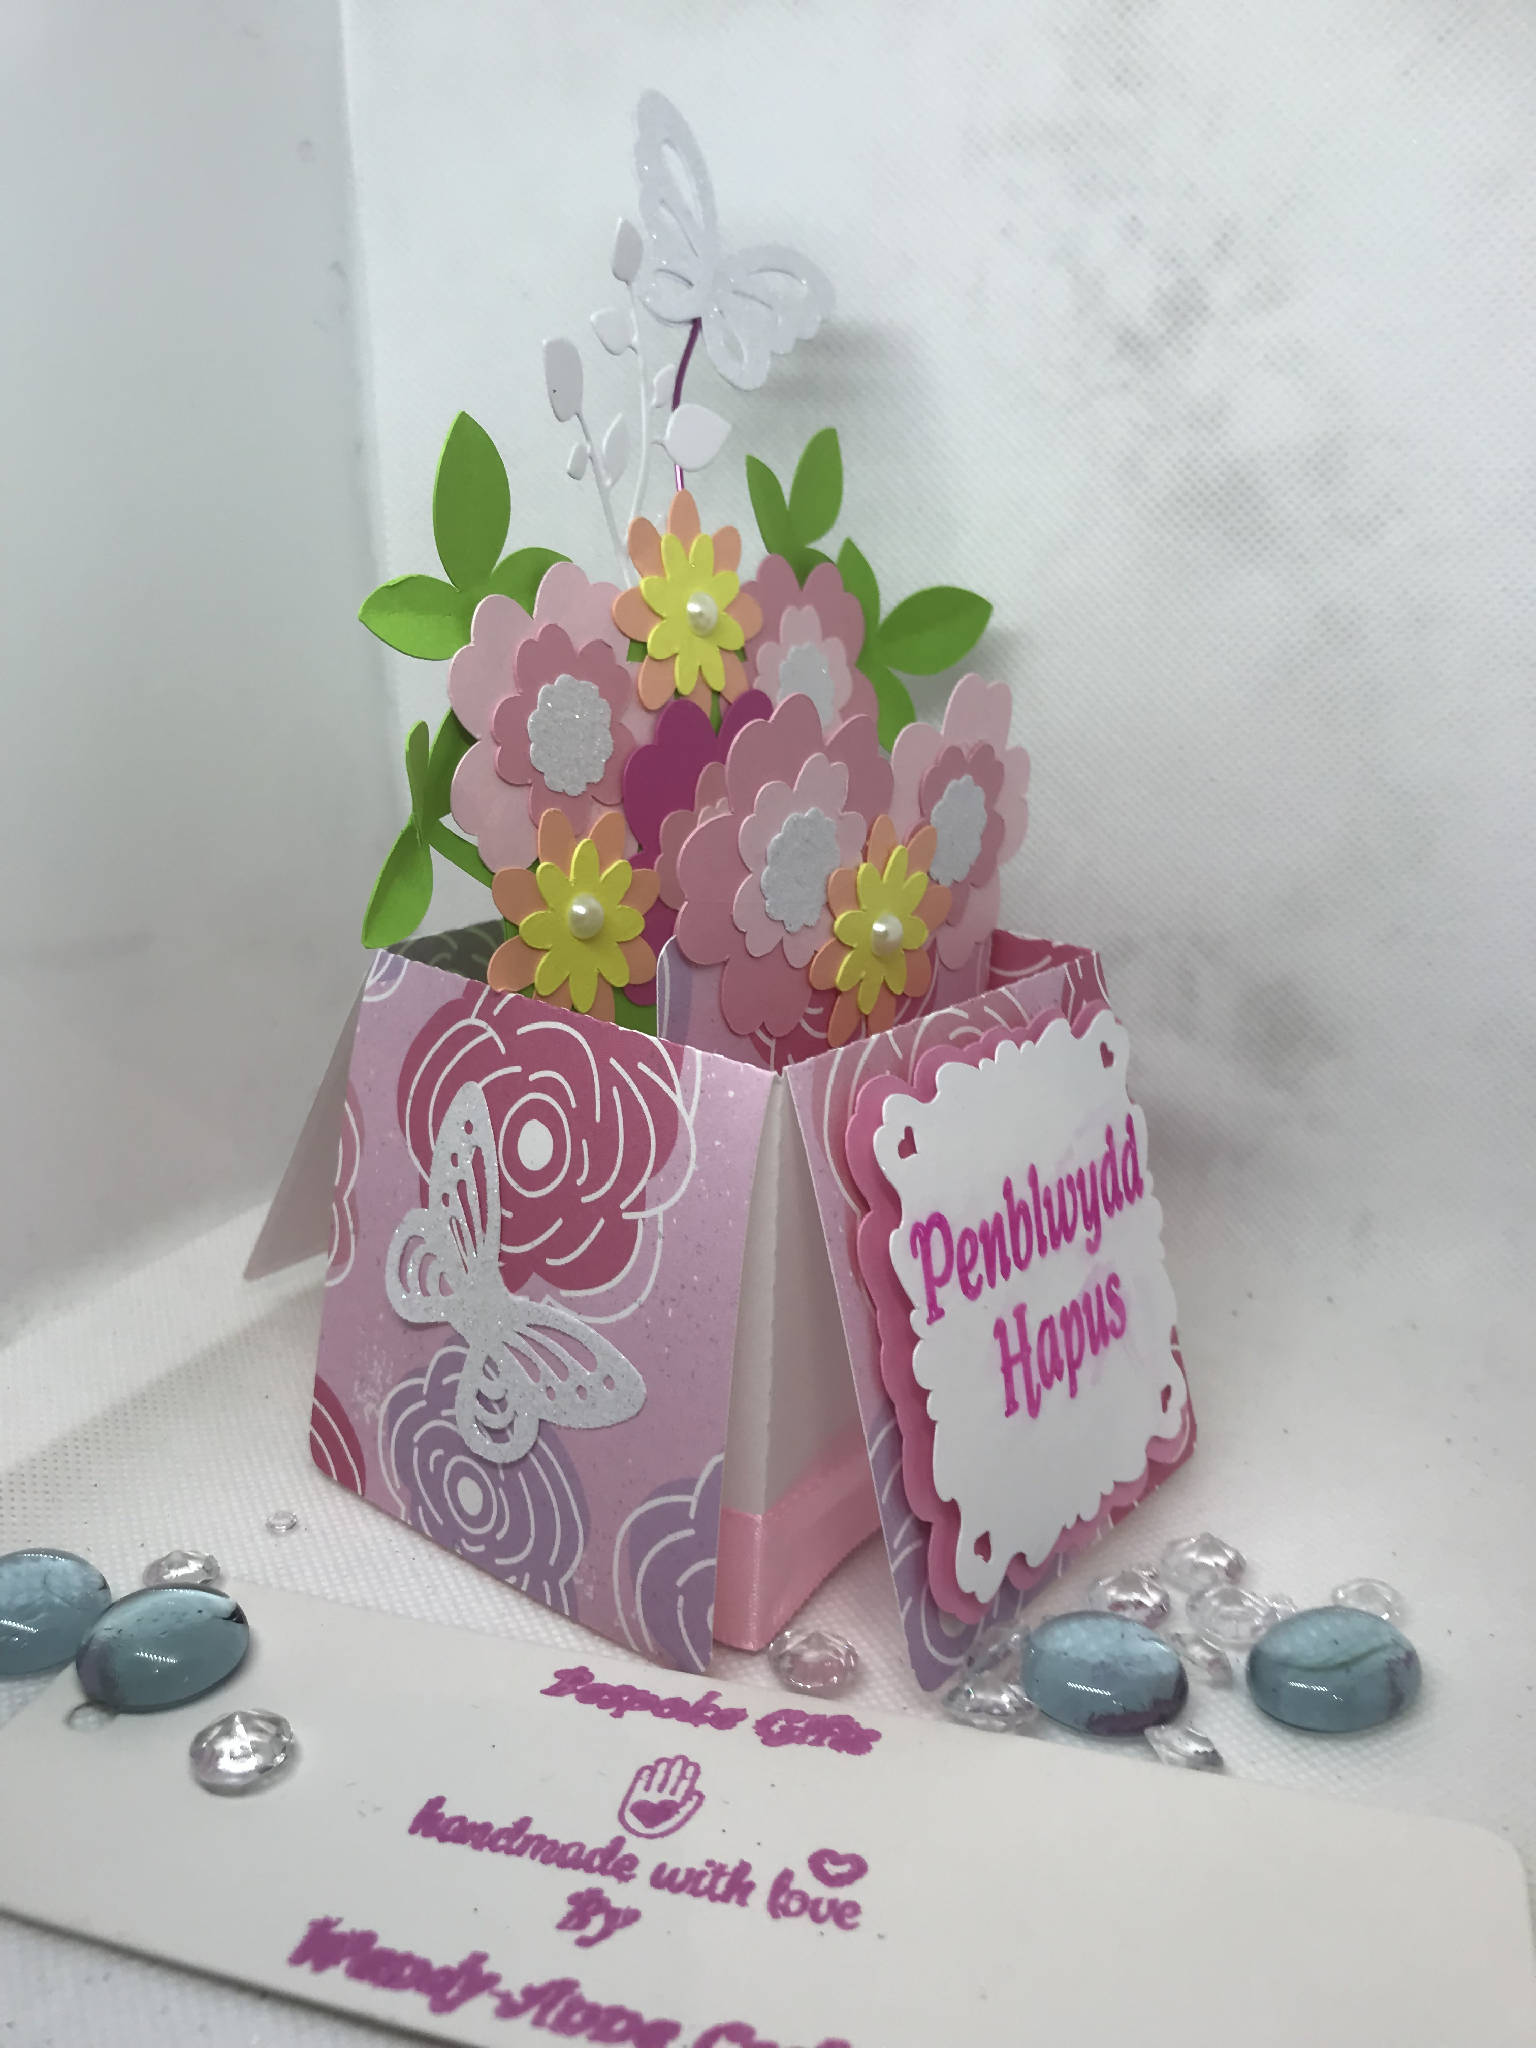 Lovely pop up flower birthday card Penblwydd Hapus